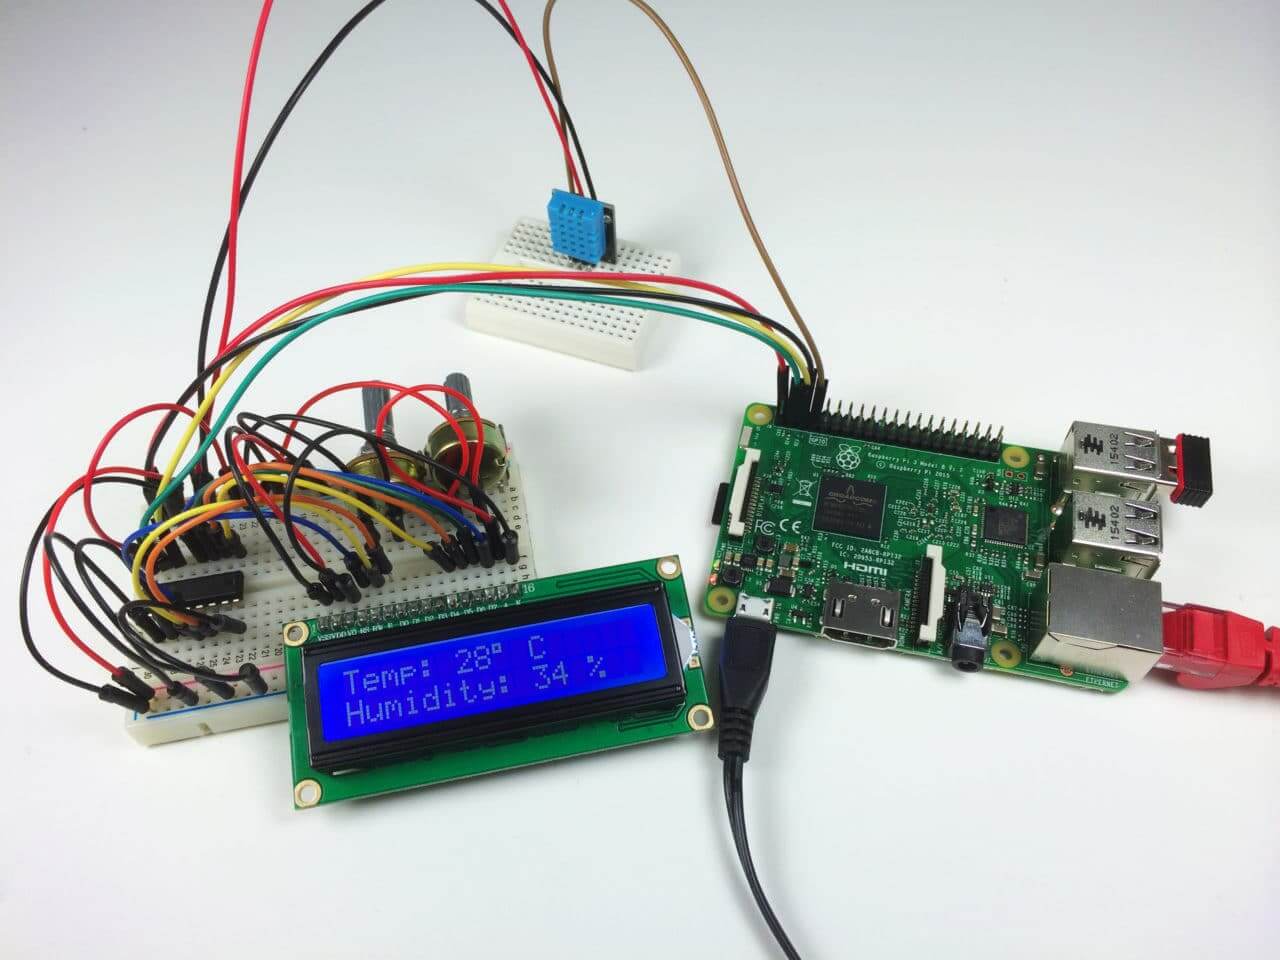 How to configure Raspberry Pi as a microcontroller